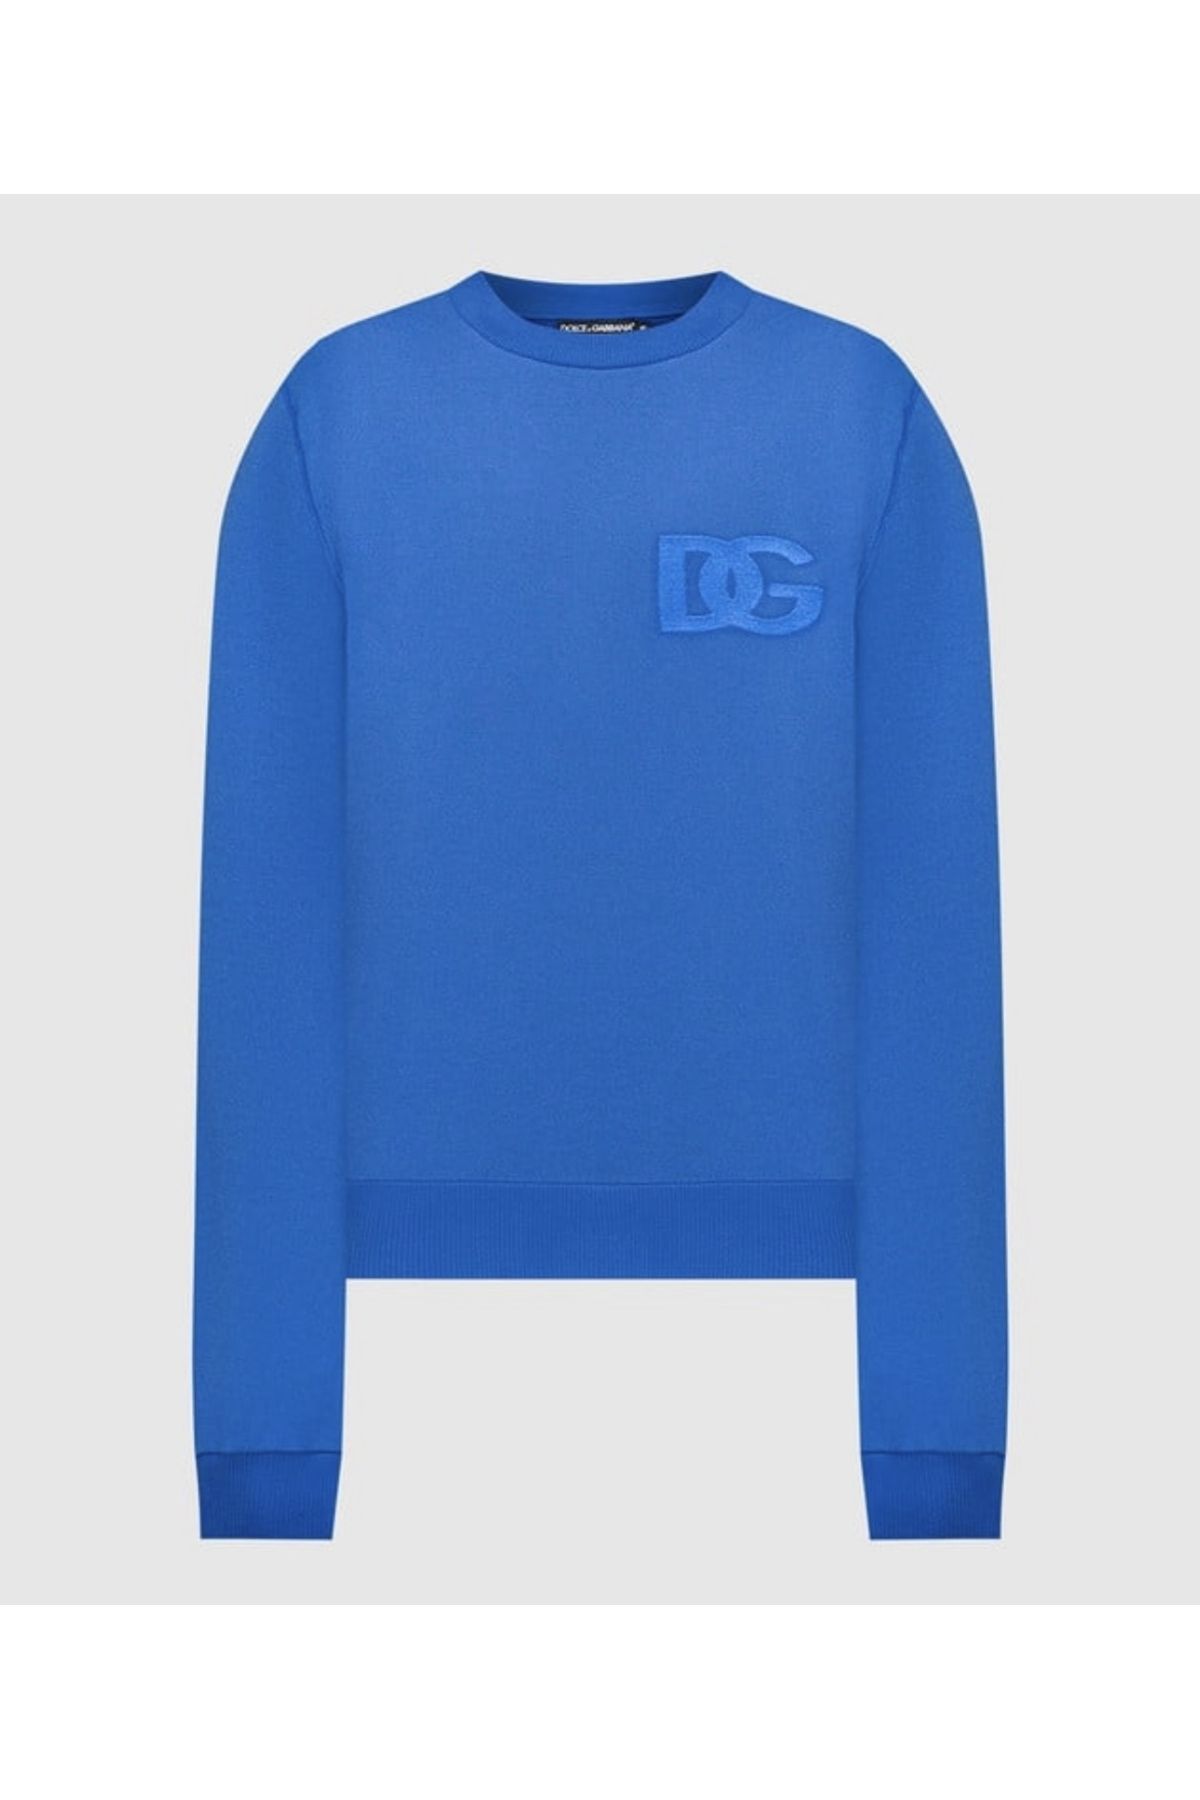 Dolce&Gabbana DG patch sweatshirt